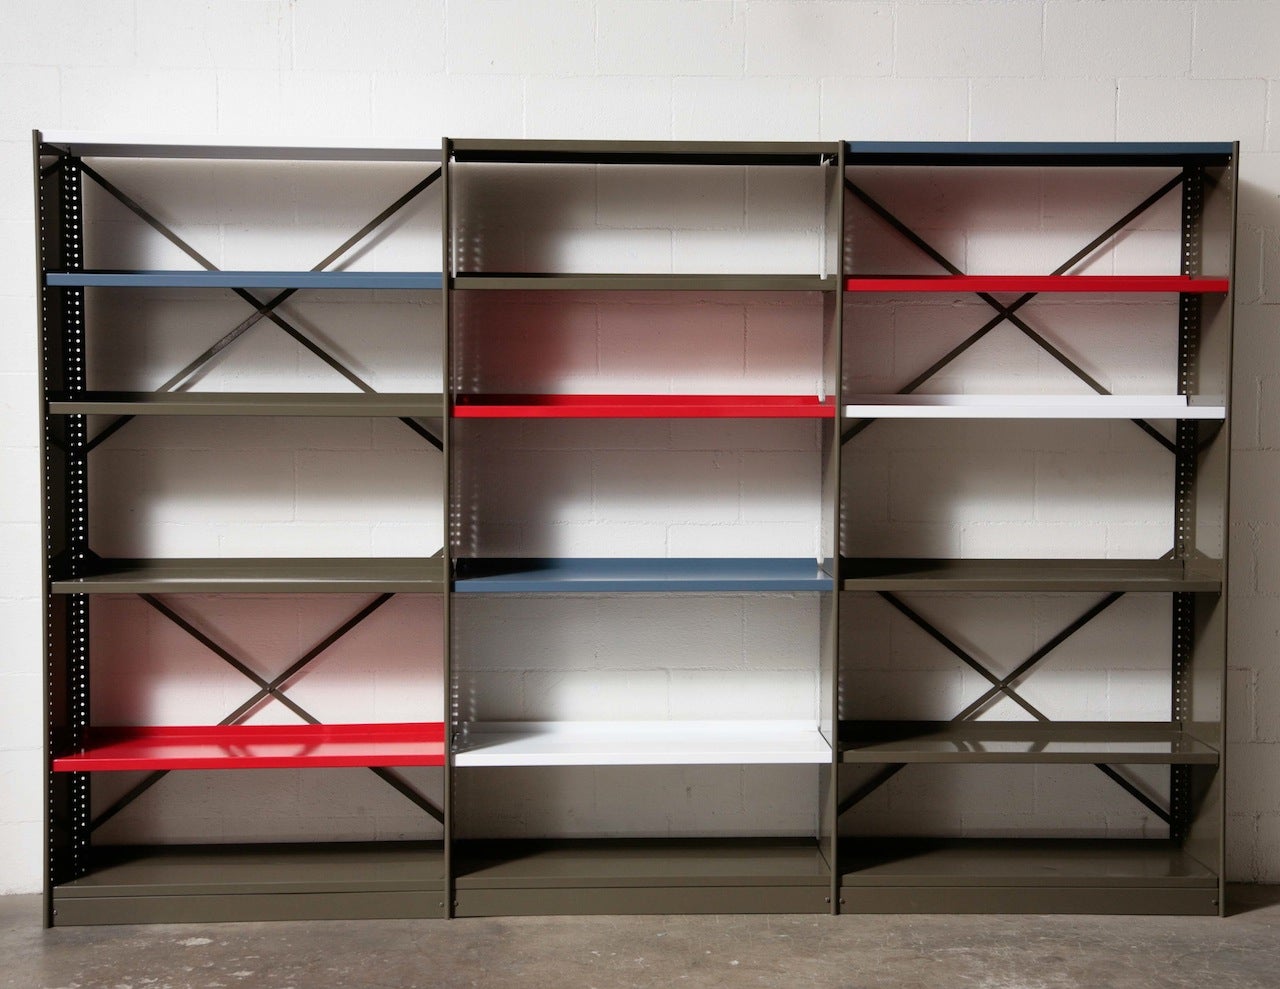 Friso Kramer "Stabilux" Industrial Sheet Metal Bookshelf